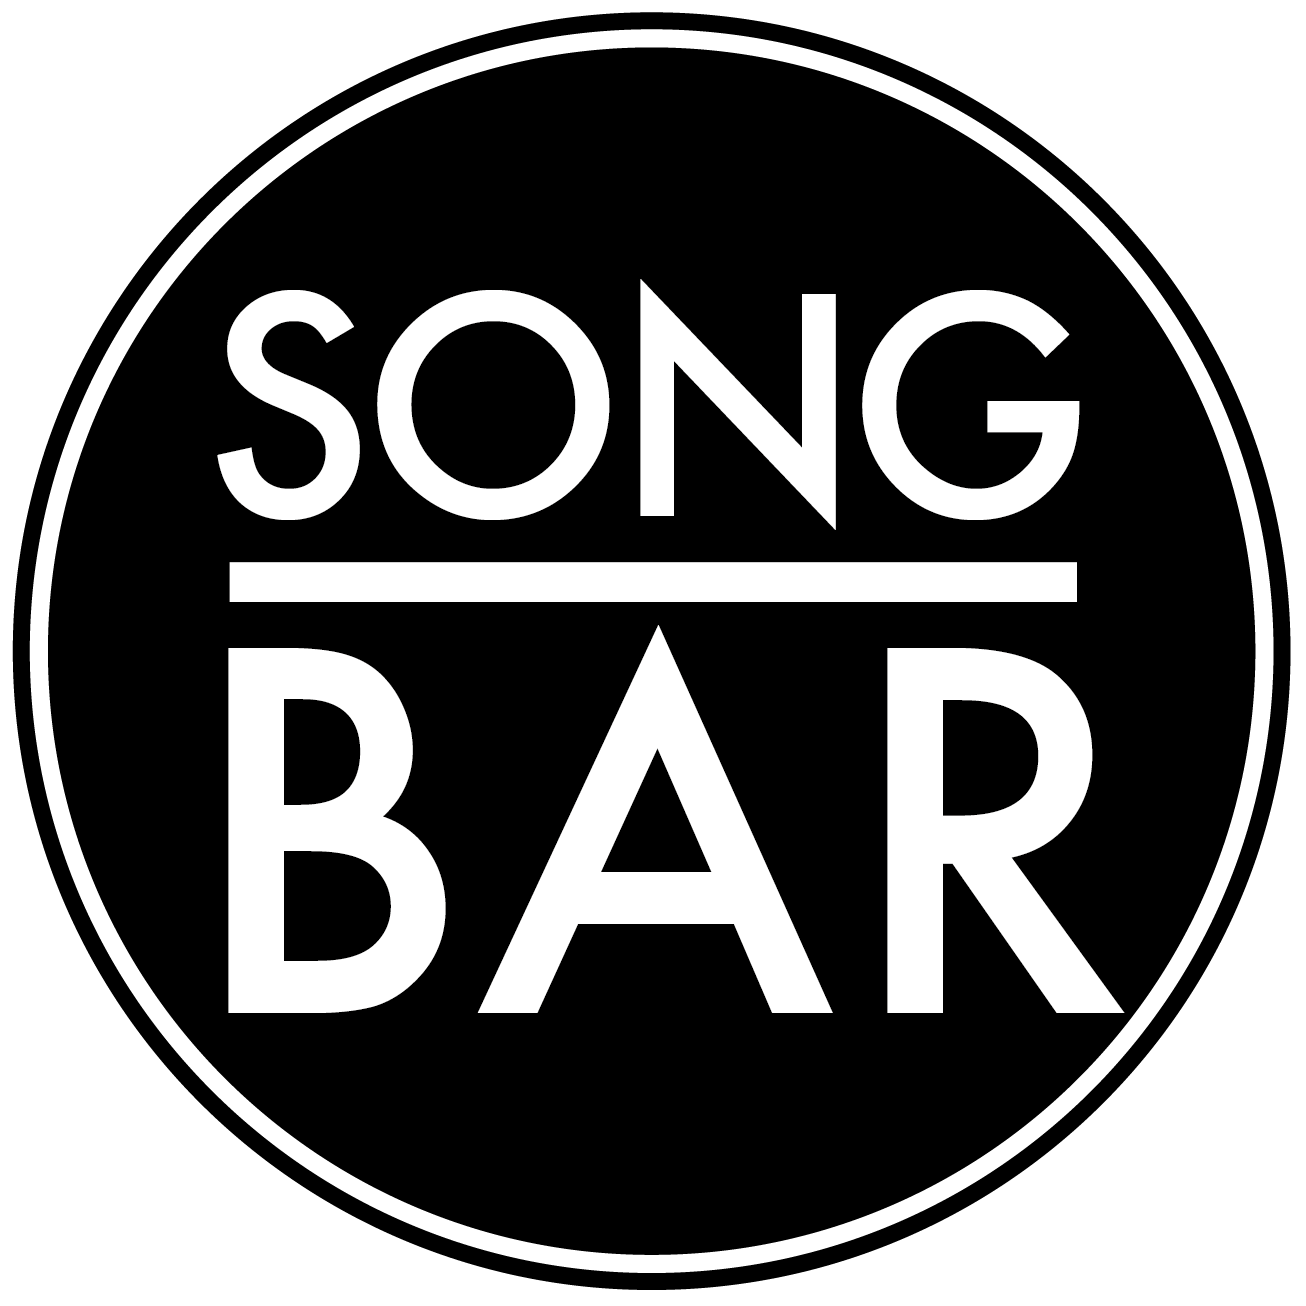 Song Bar